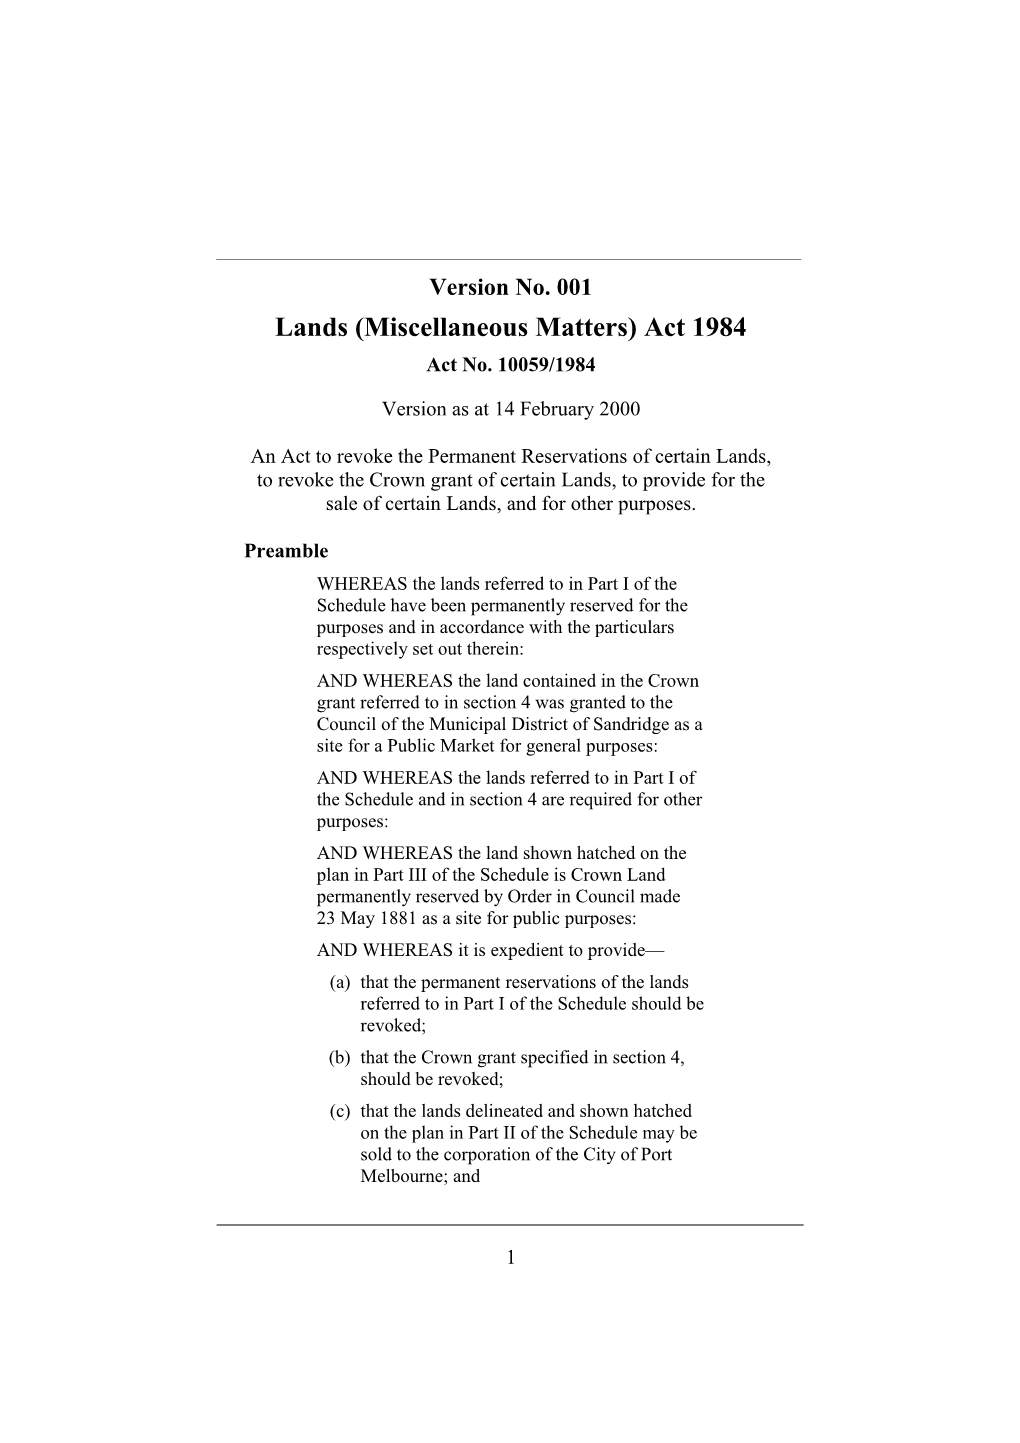 Lands (Miscellaneous Matters) Act 1984